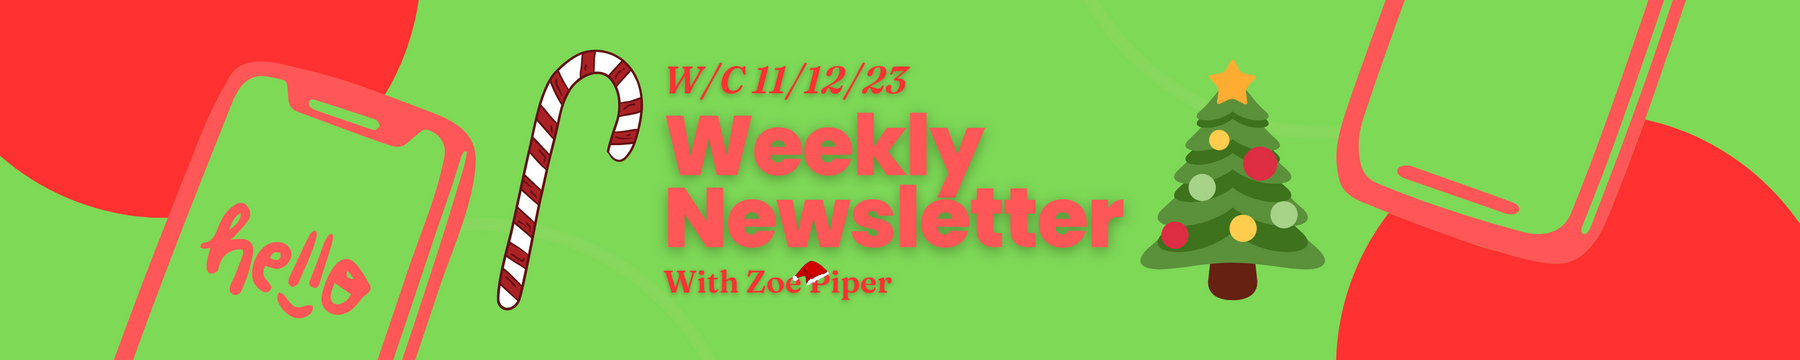 Weekly Newsletter W/C 11/12/23